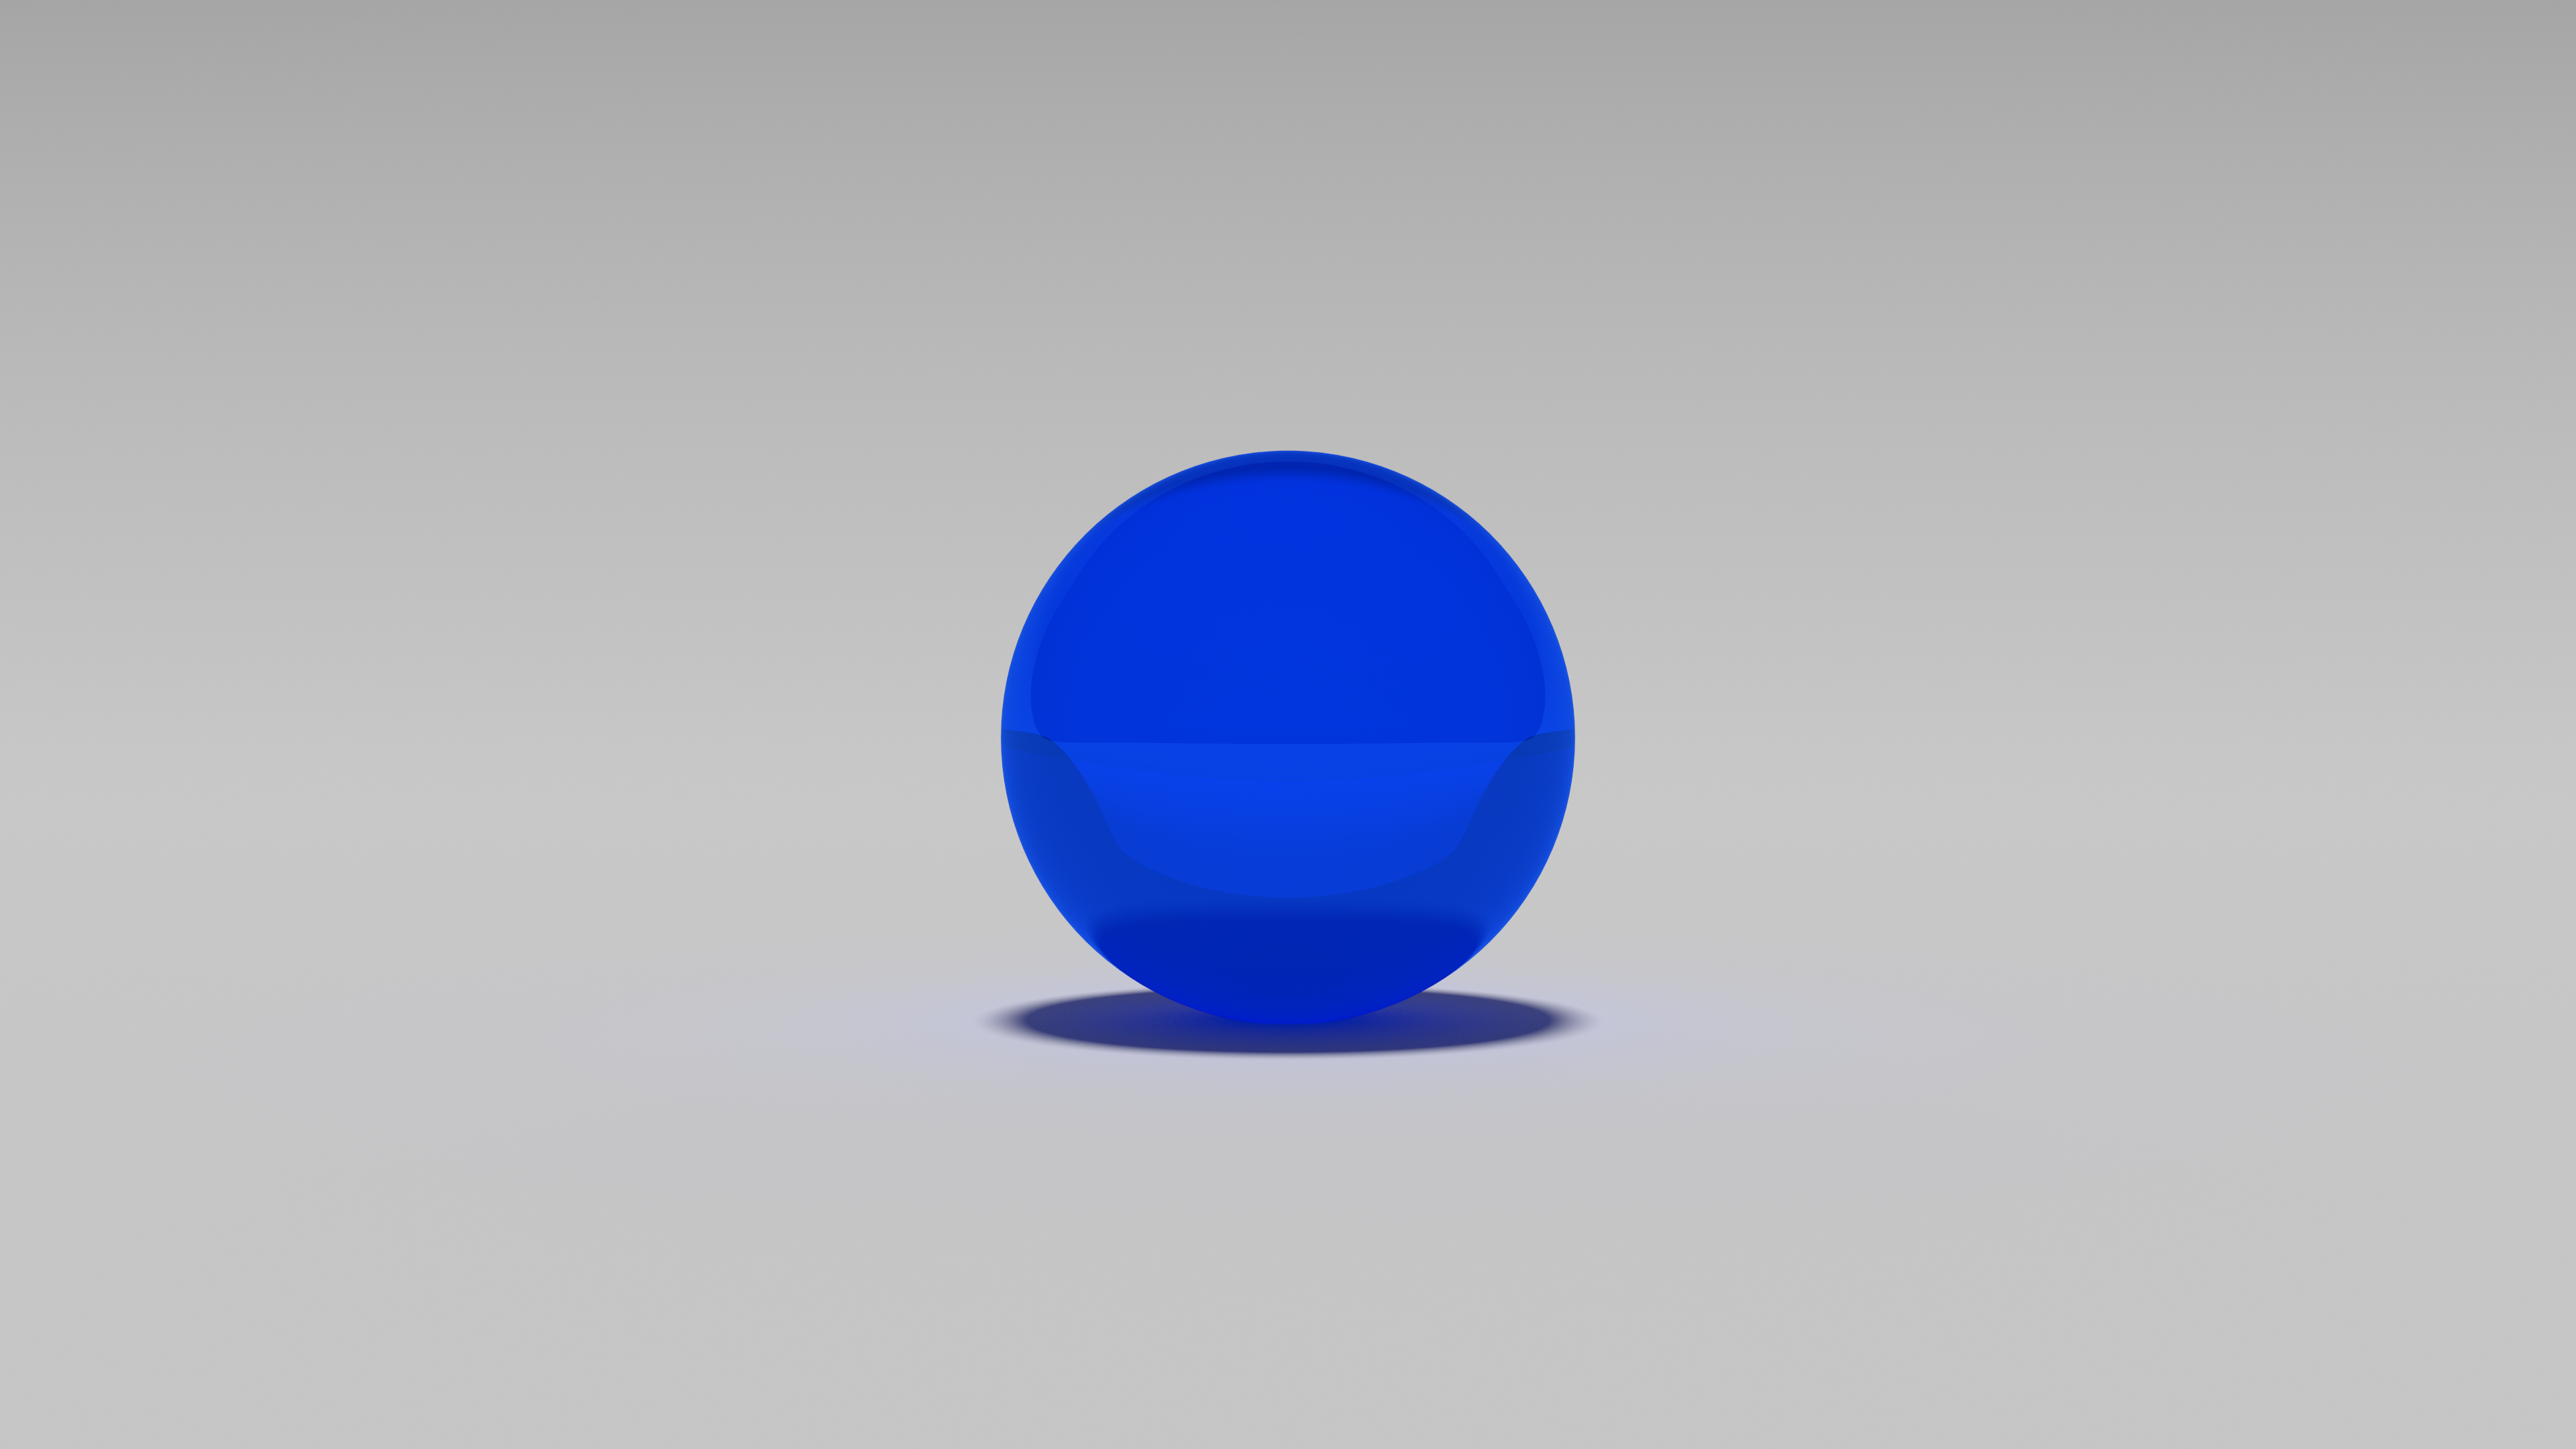 General 3840x2160 CGI depth of field minimalism blue ball simple background gray background gradient